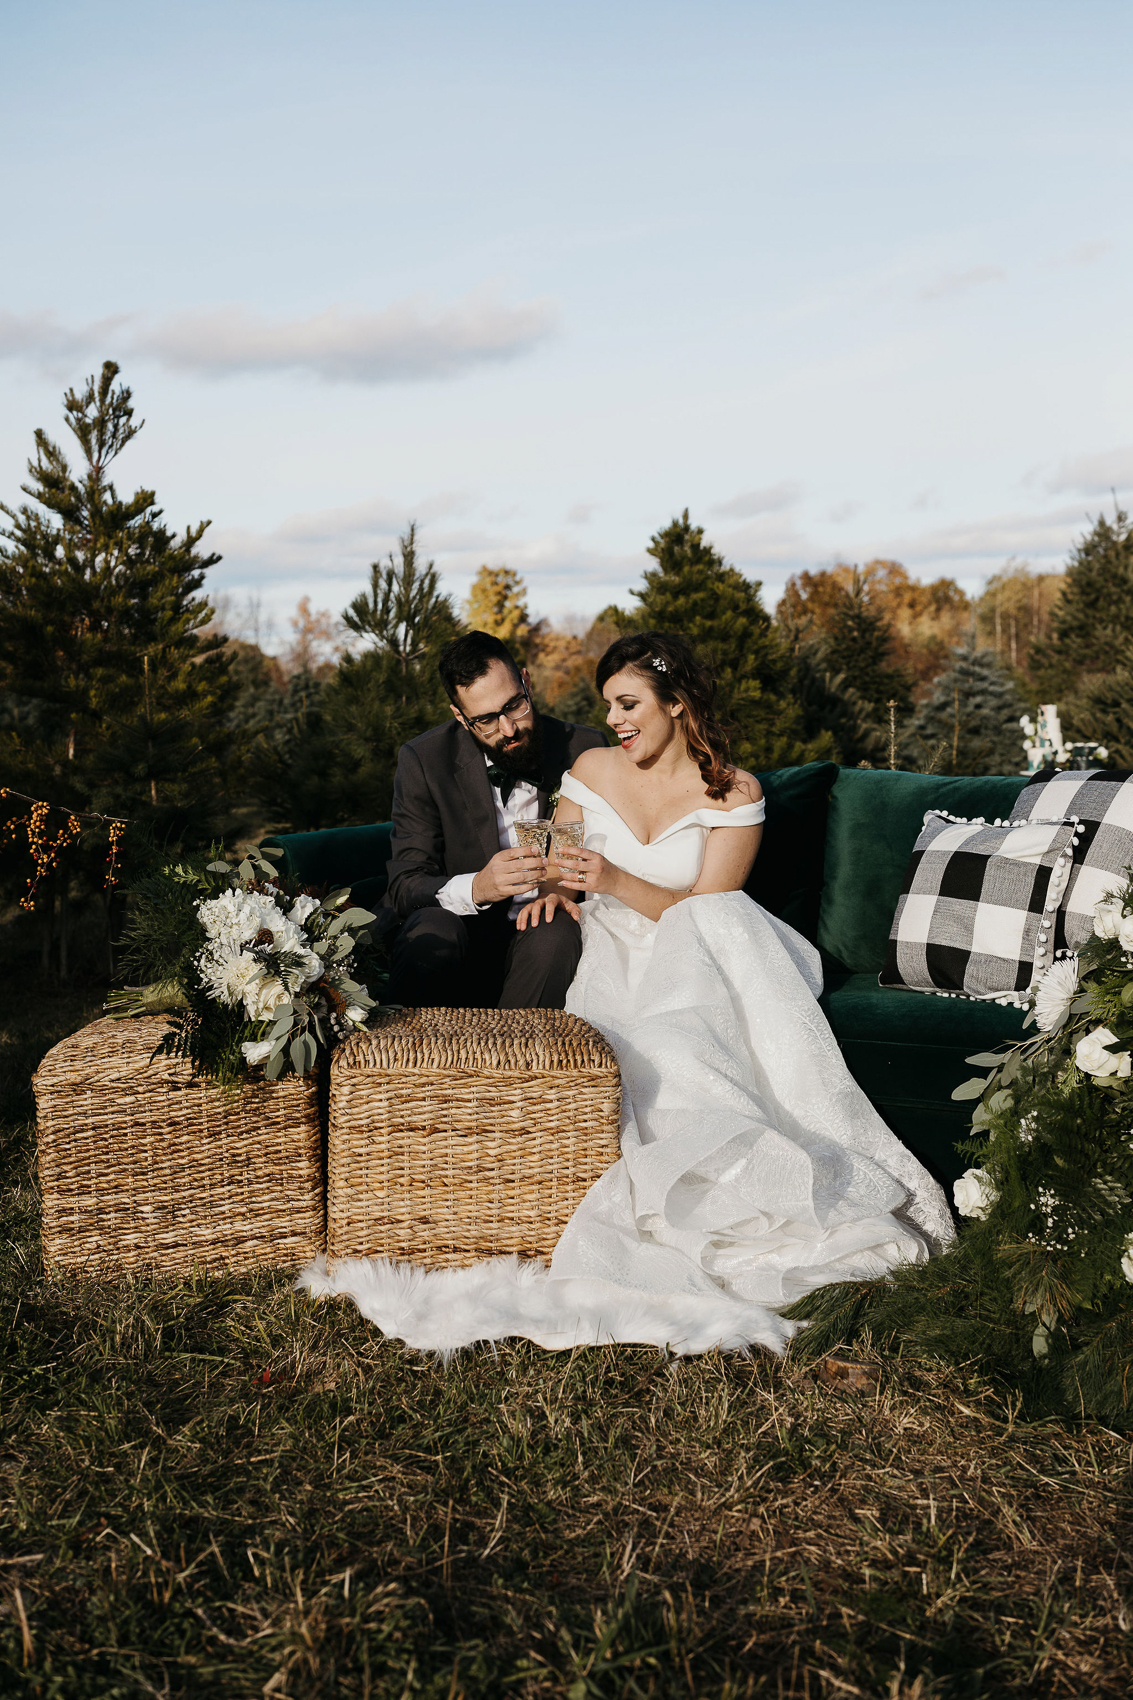 Cozy Romance & Cheery Winter Vibes | Something Blue Weddings